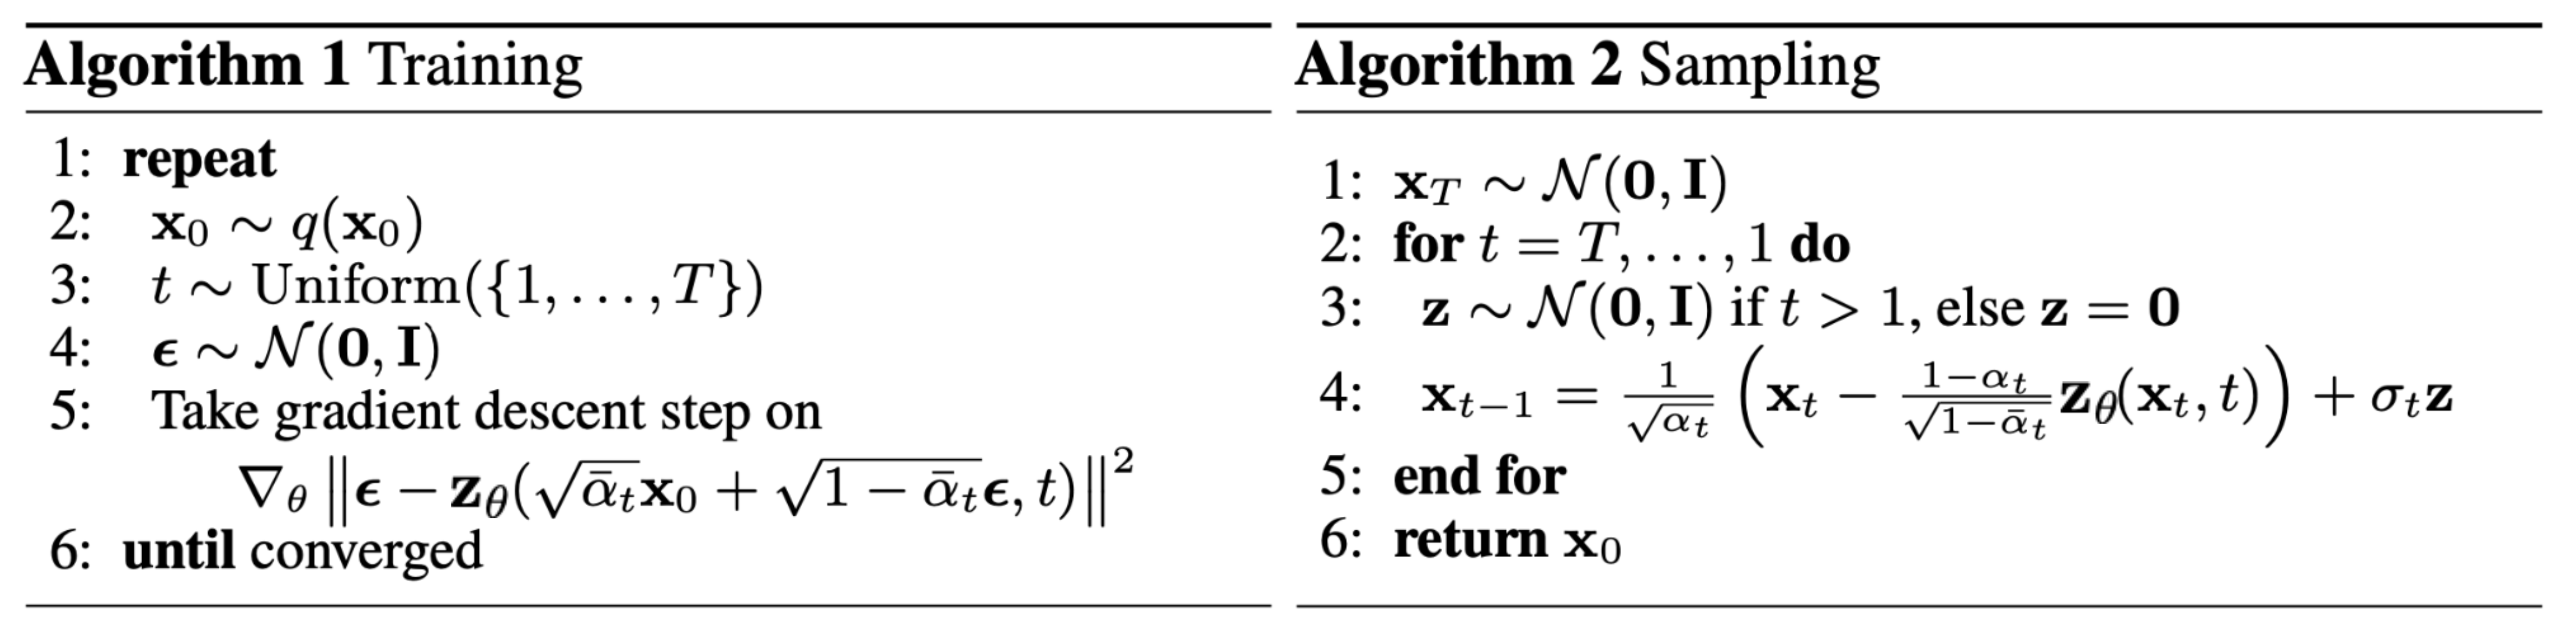 DDPM algorithm